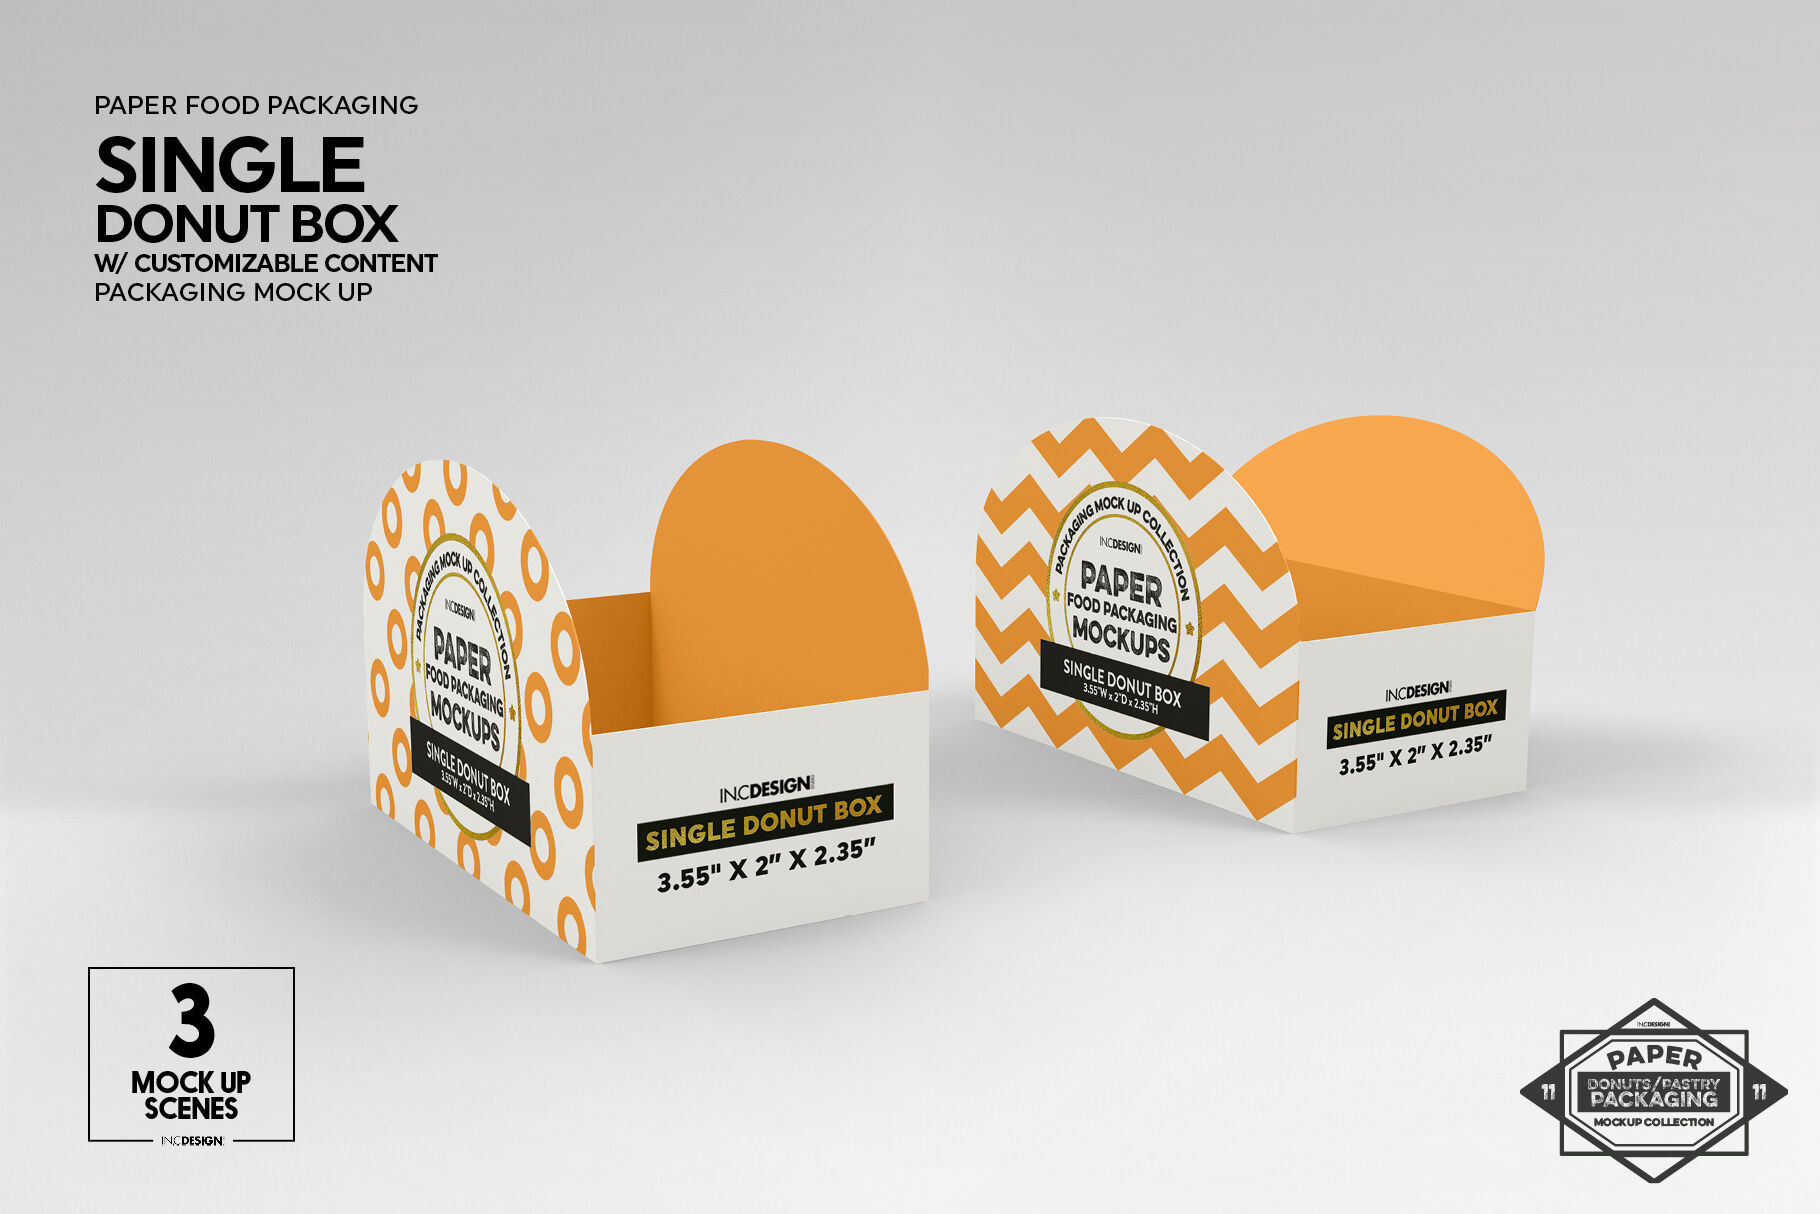 Single Donut Box Packaging Mockup By INC Design Studio | TheHungryJPEG.com